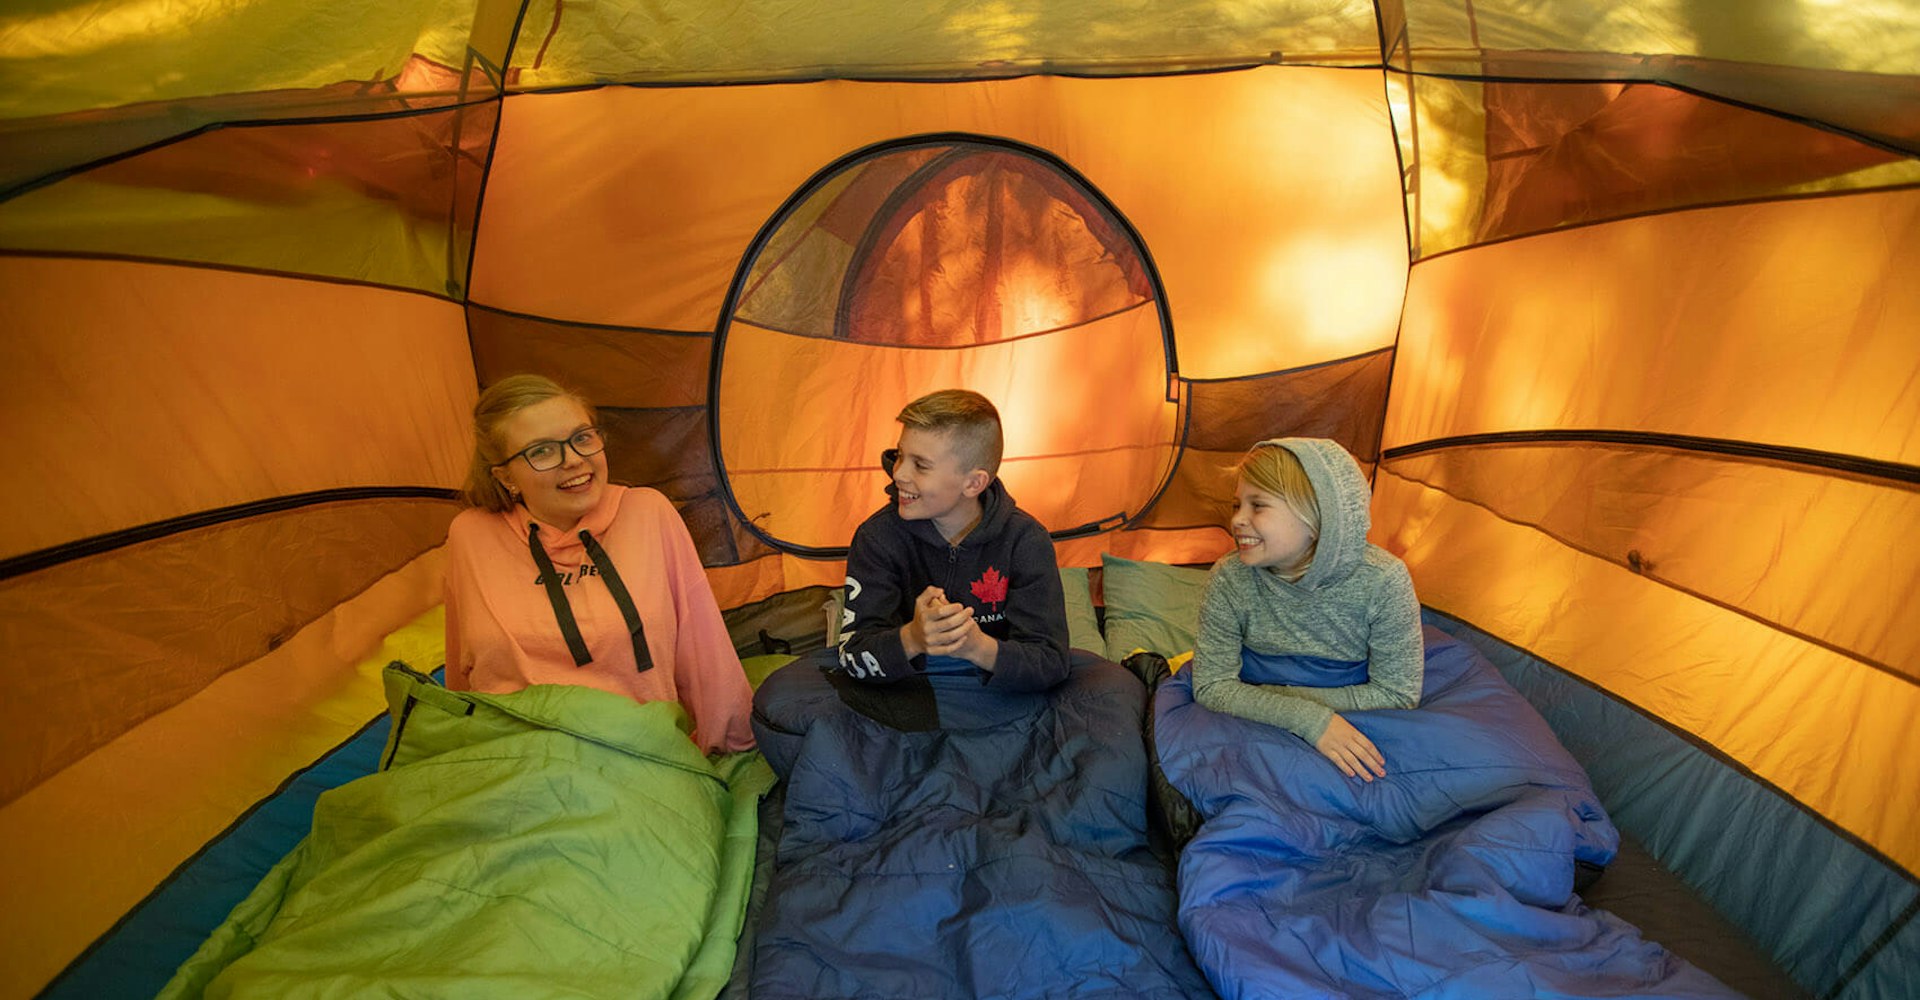 Kids in Tent